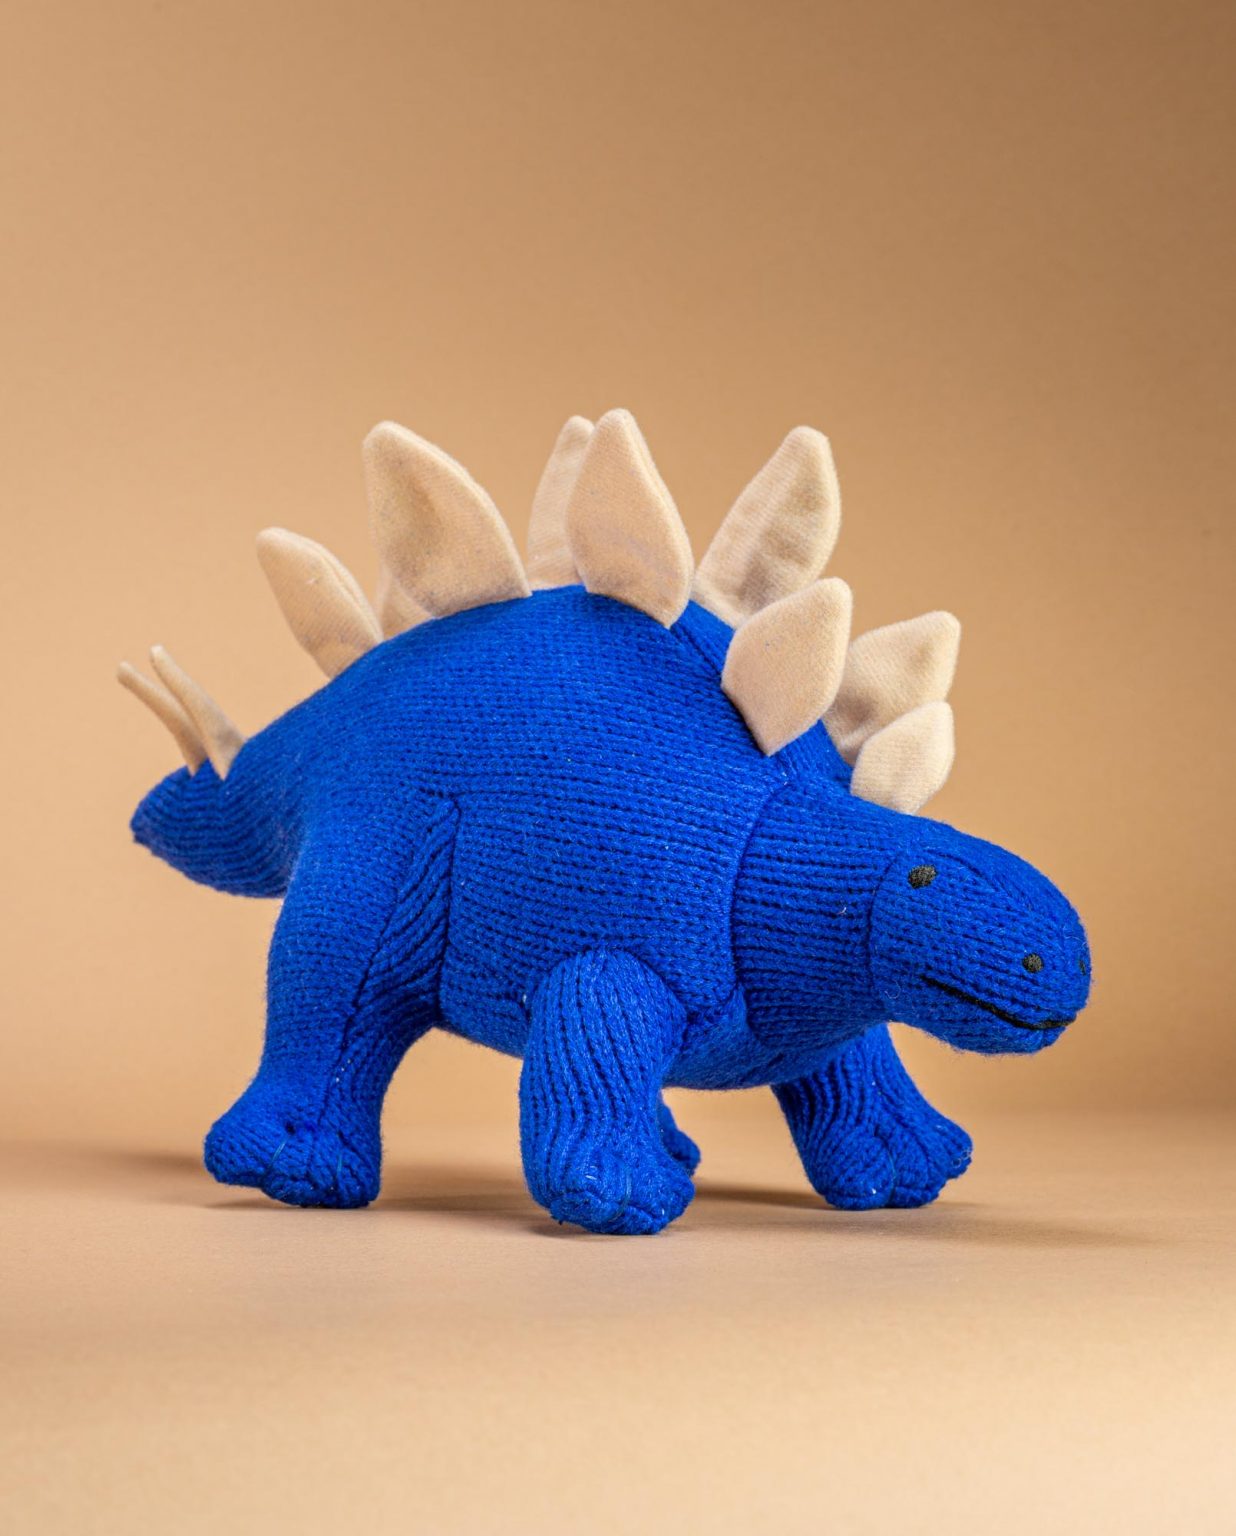 Knitted Stegosaurus Toy